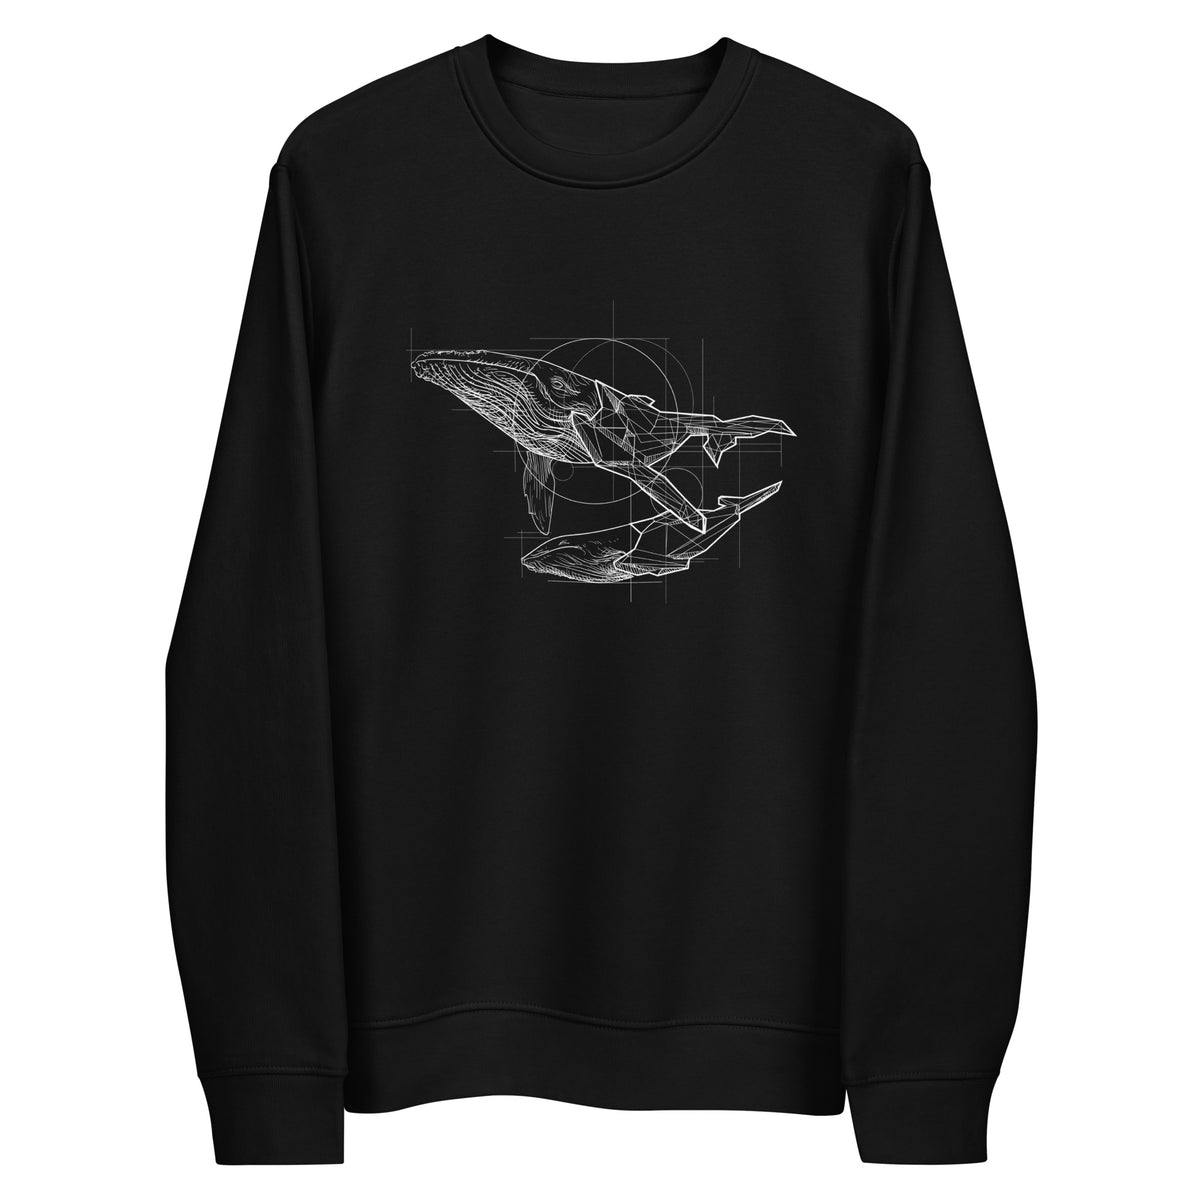 Unisex Whale Gold Star Sweatshirt - Adult